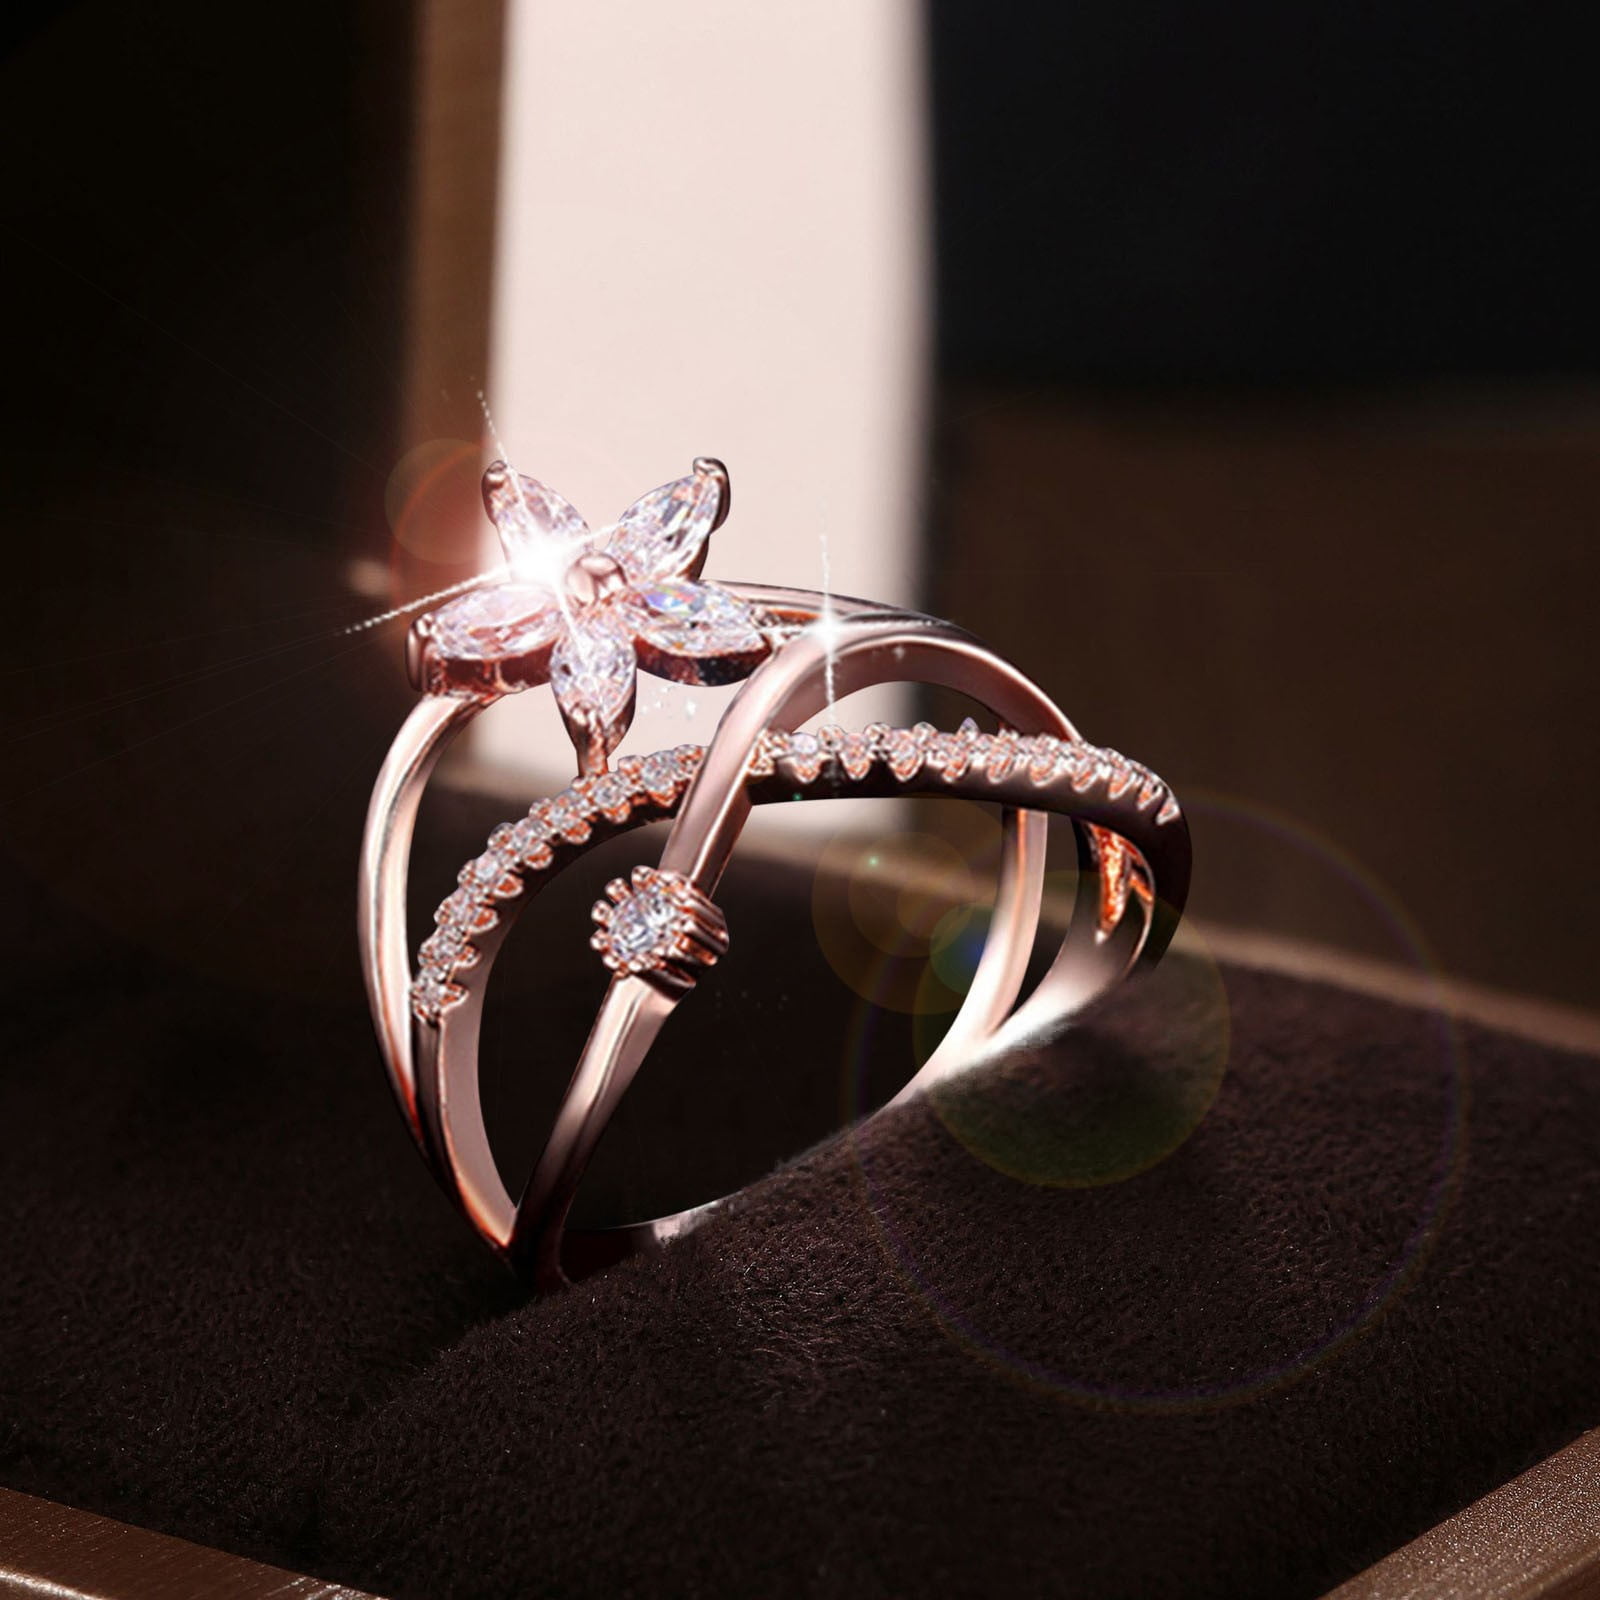 AZVA 18kt rose gold ring with diamonds | Gold rings jewelry, Gold rings  fashion, Womens jewelry rings